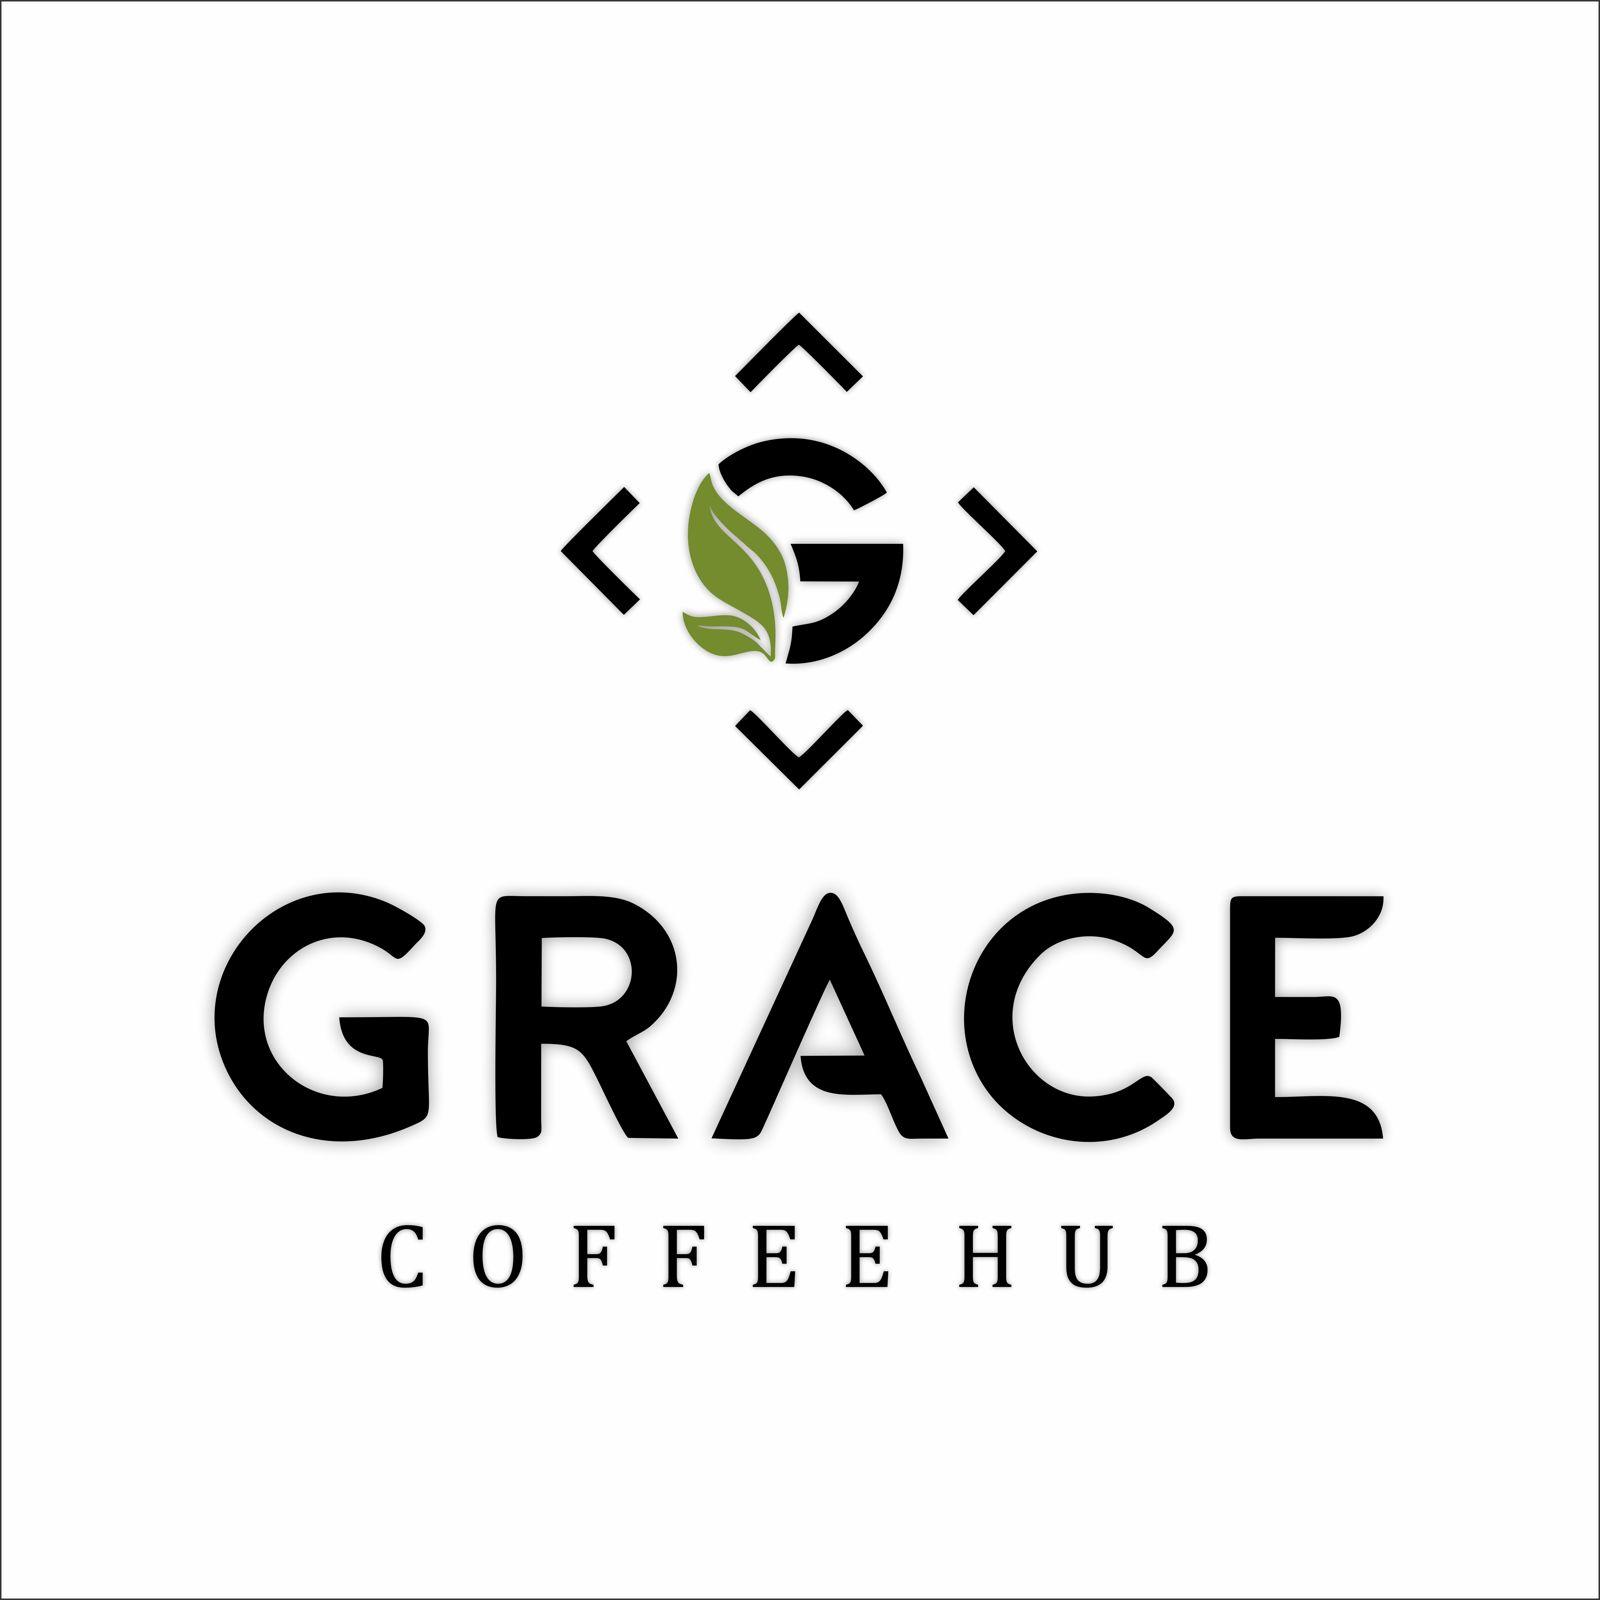 Grace Coffee Hub Logo 17 April